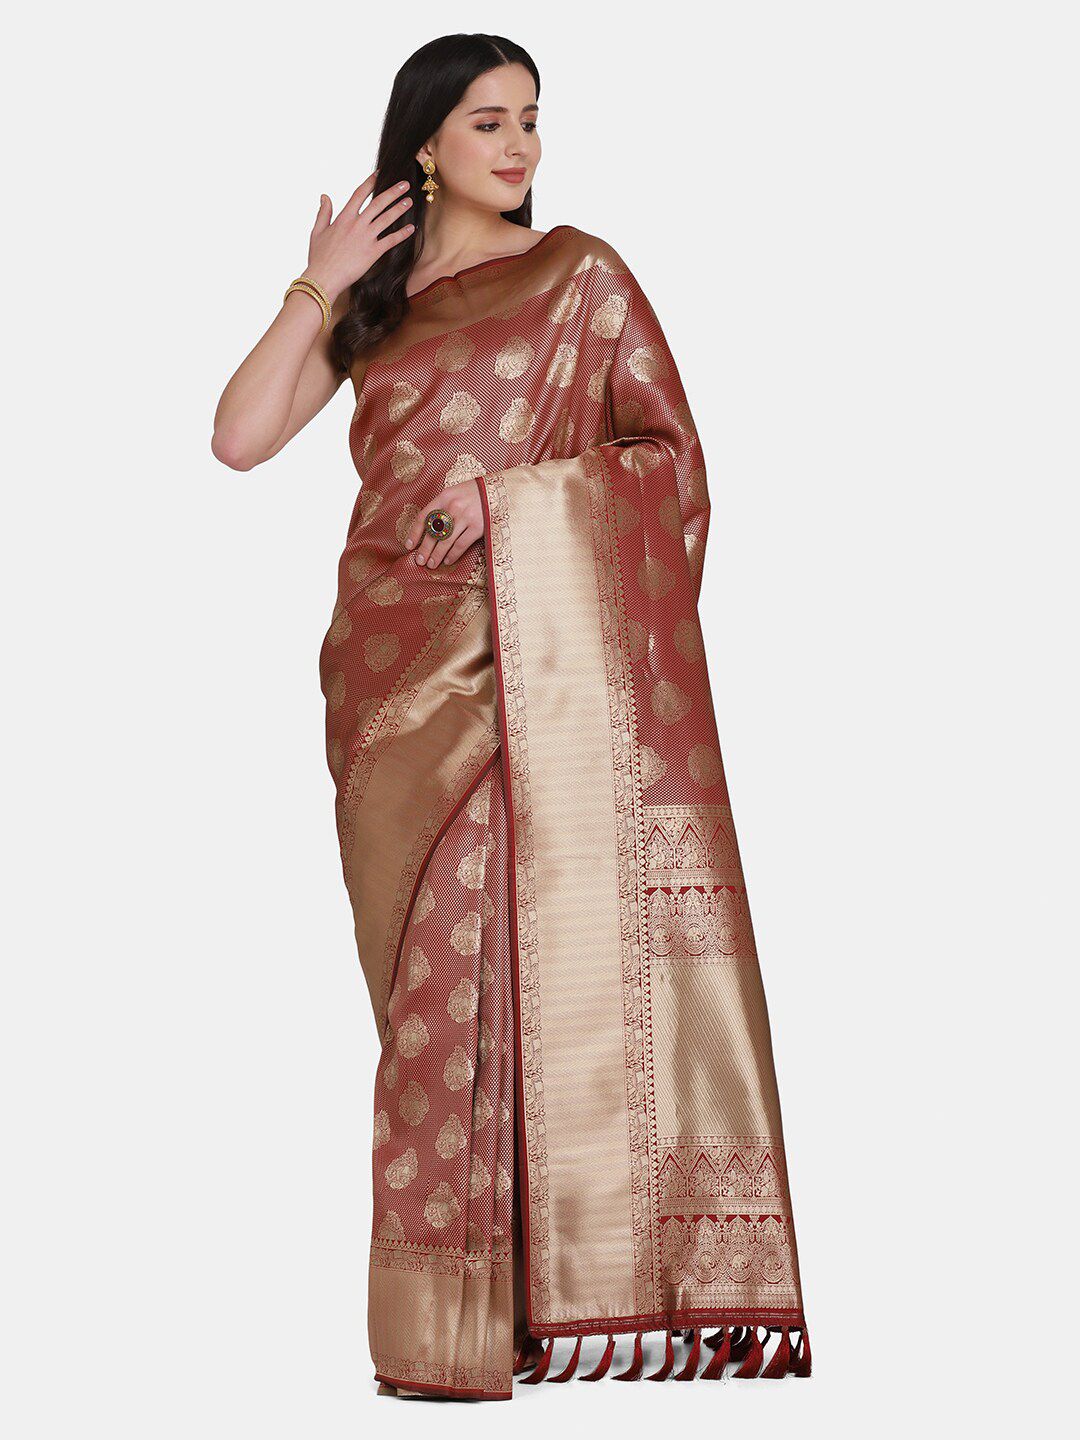 BOMBAY SELECTIONS Maroon Ethnic Motifs Woven Design Pure Silk Banarasi Saree Price in India